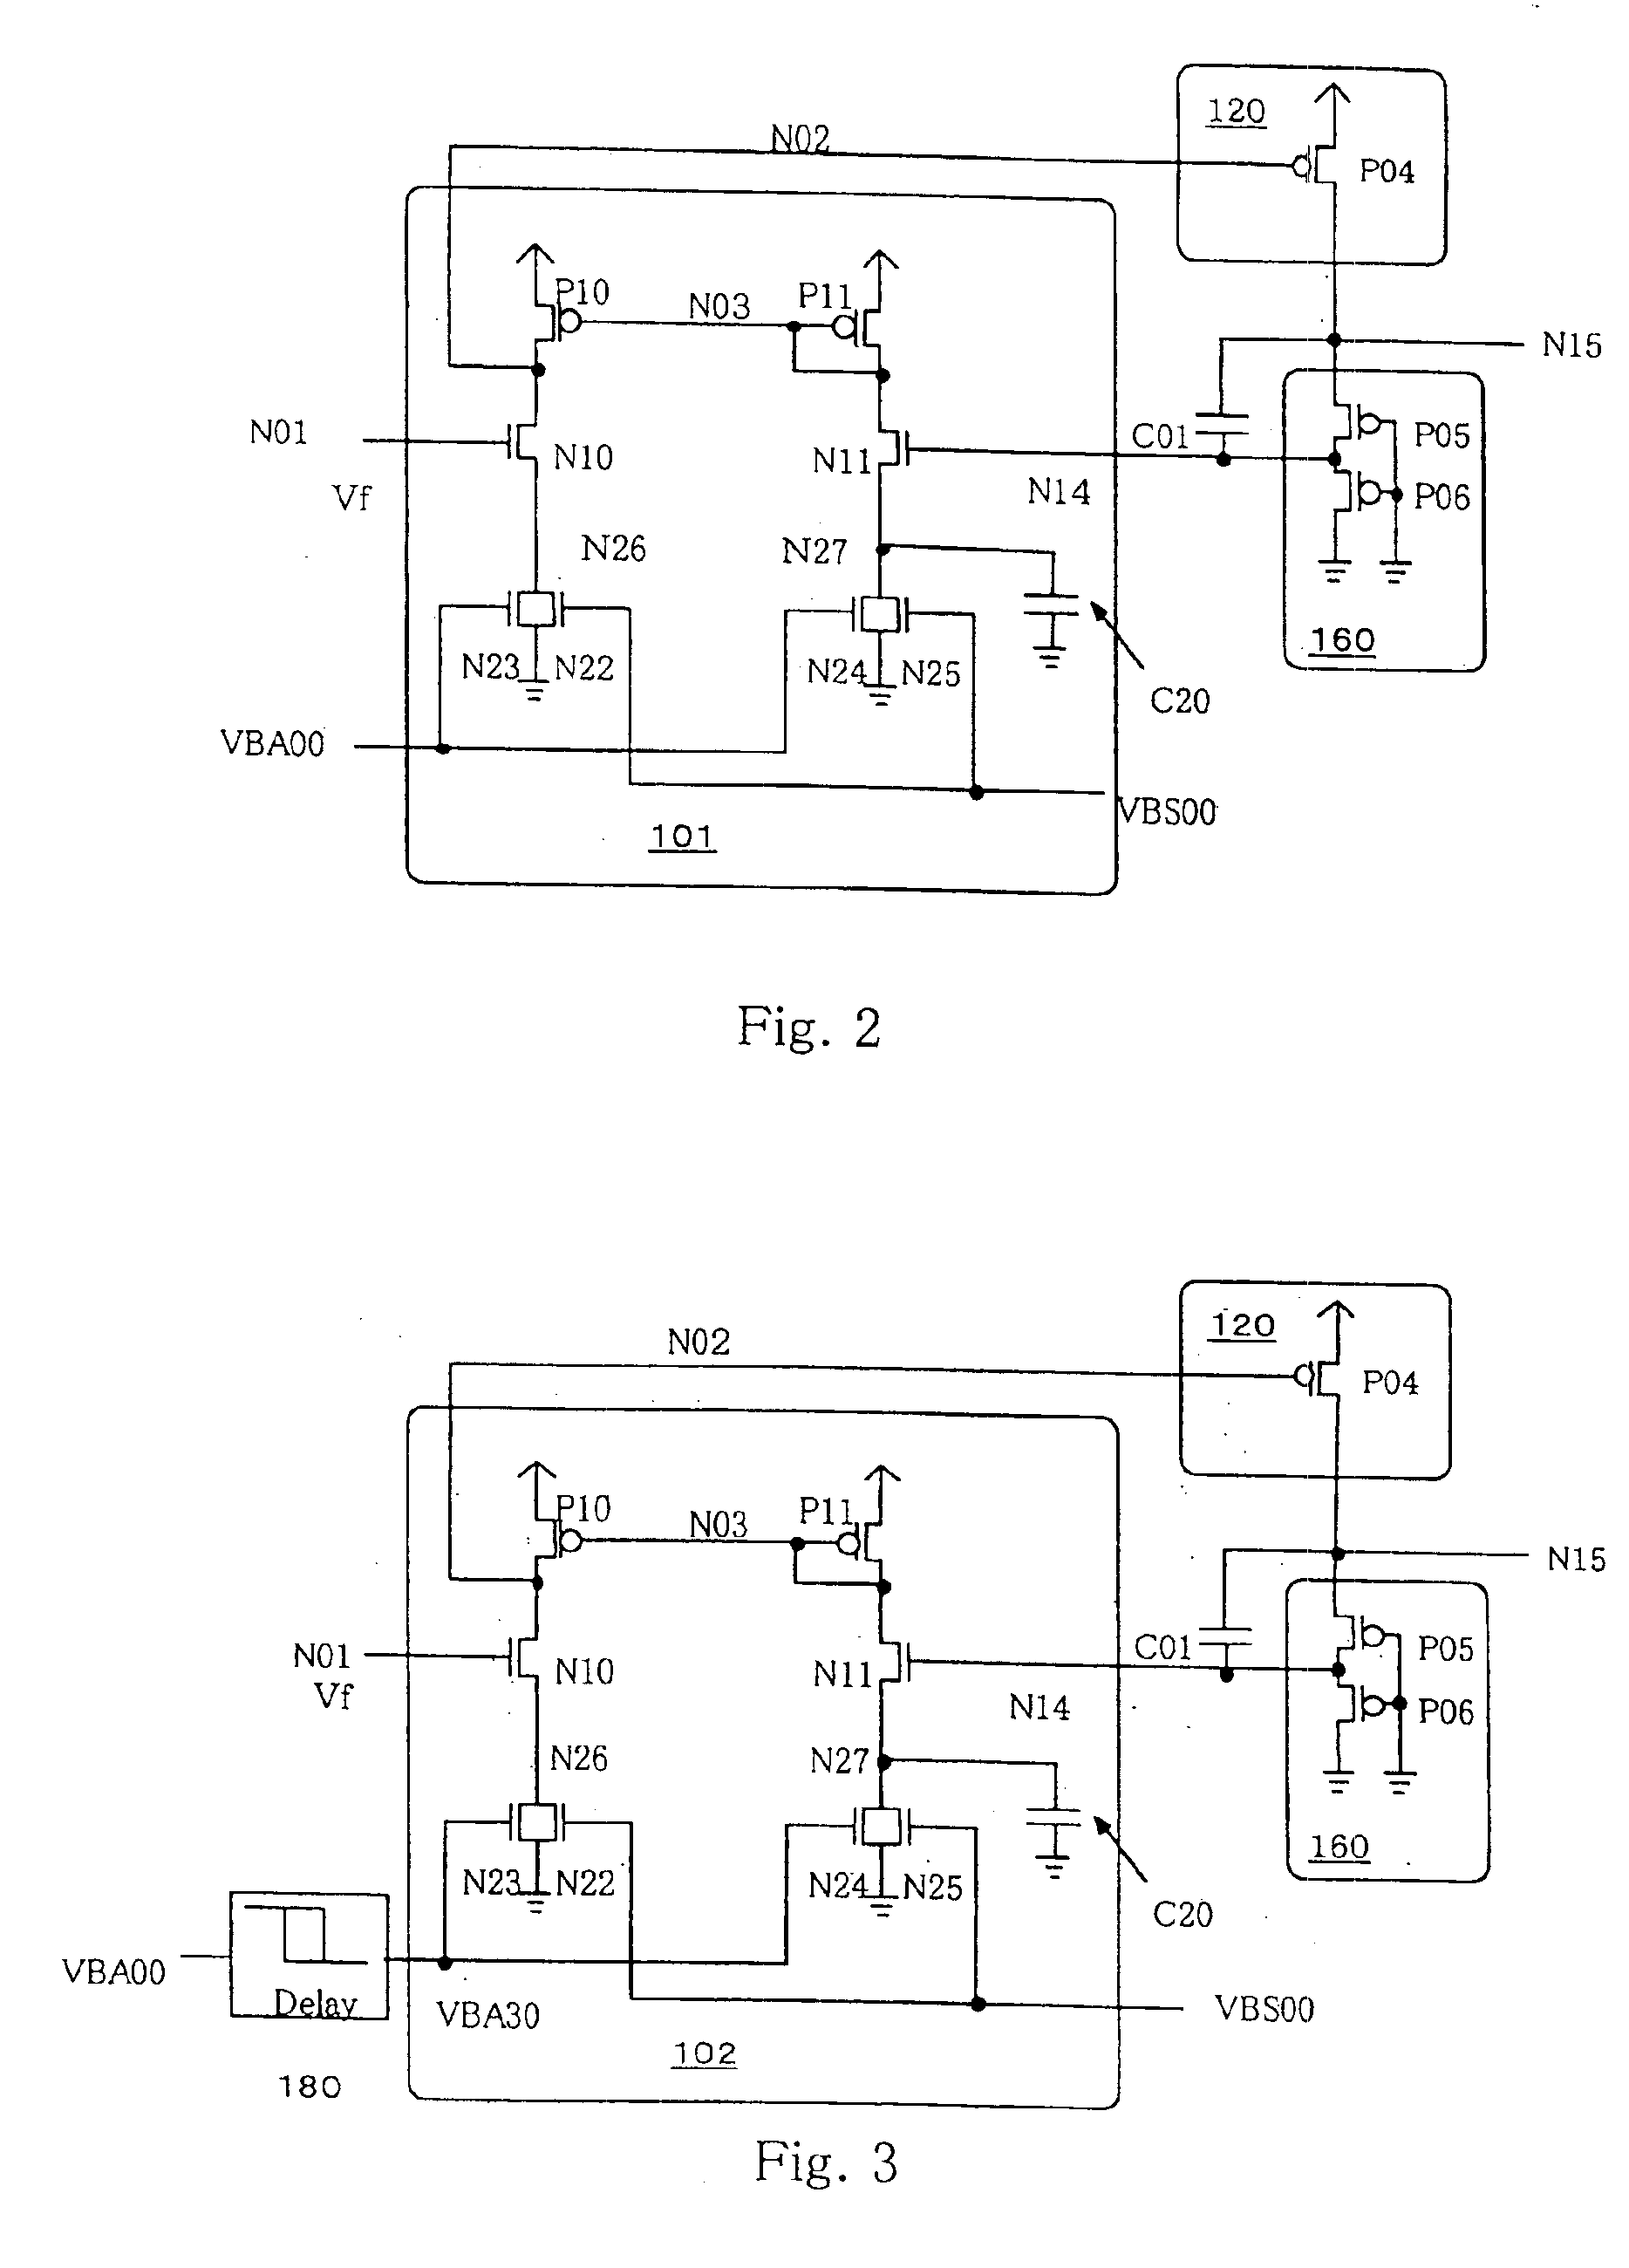 Internal step-down power supply circuit